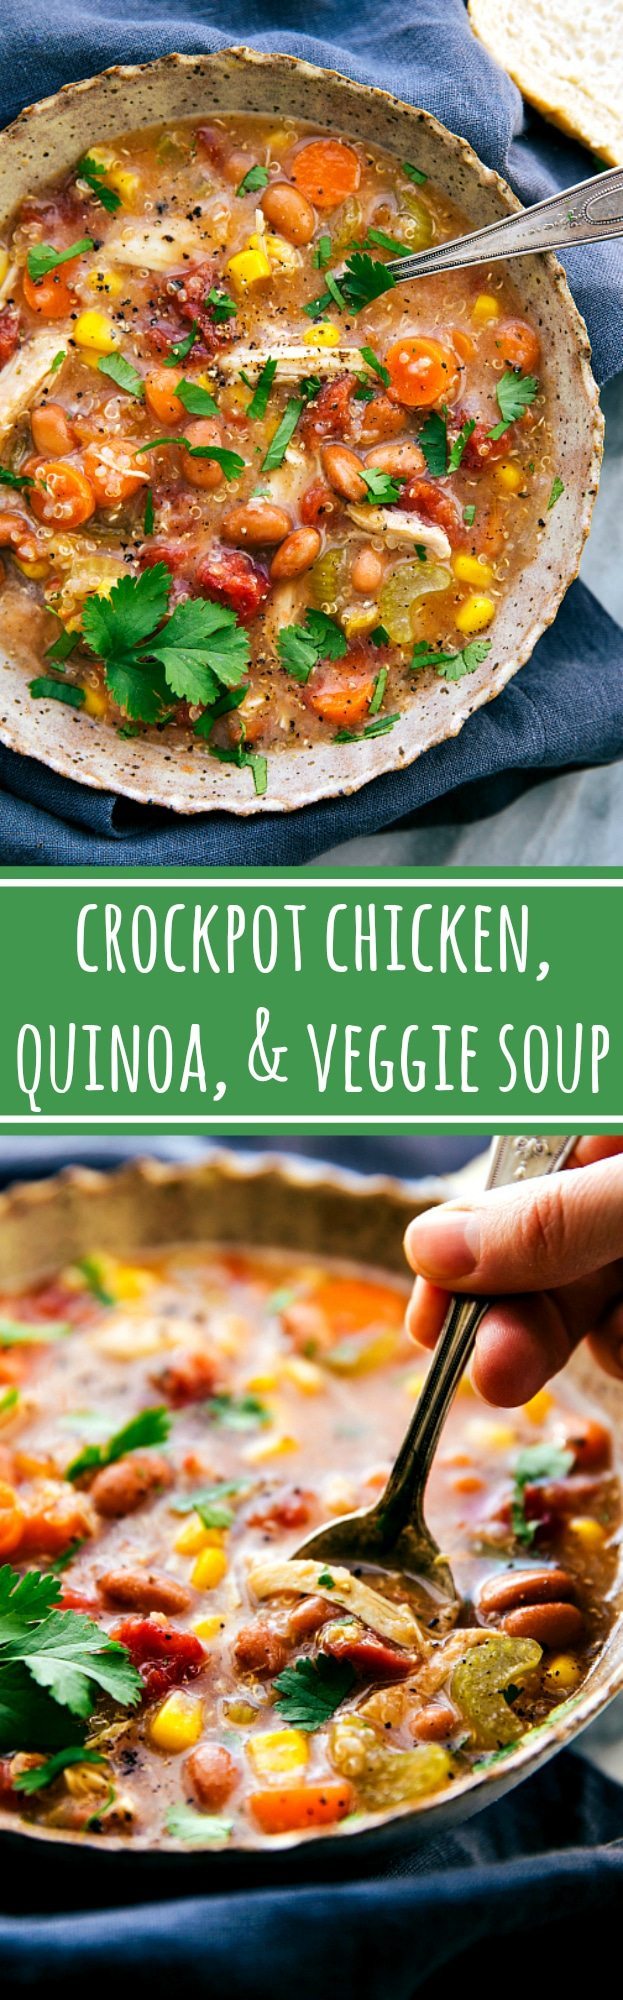 Quinoa Vegetable Soup - Chelsea's Messy Apron